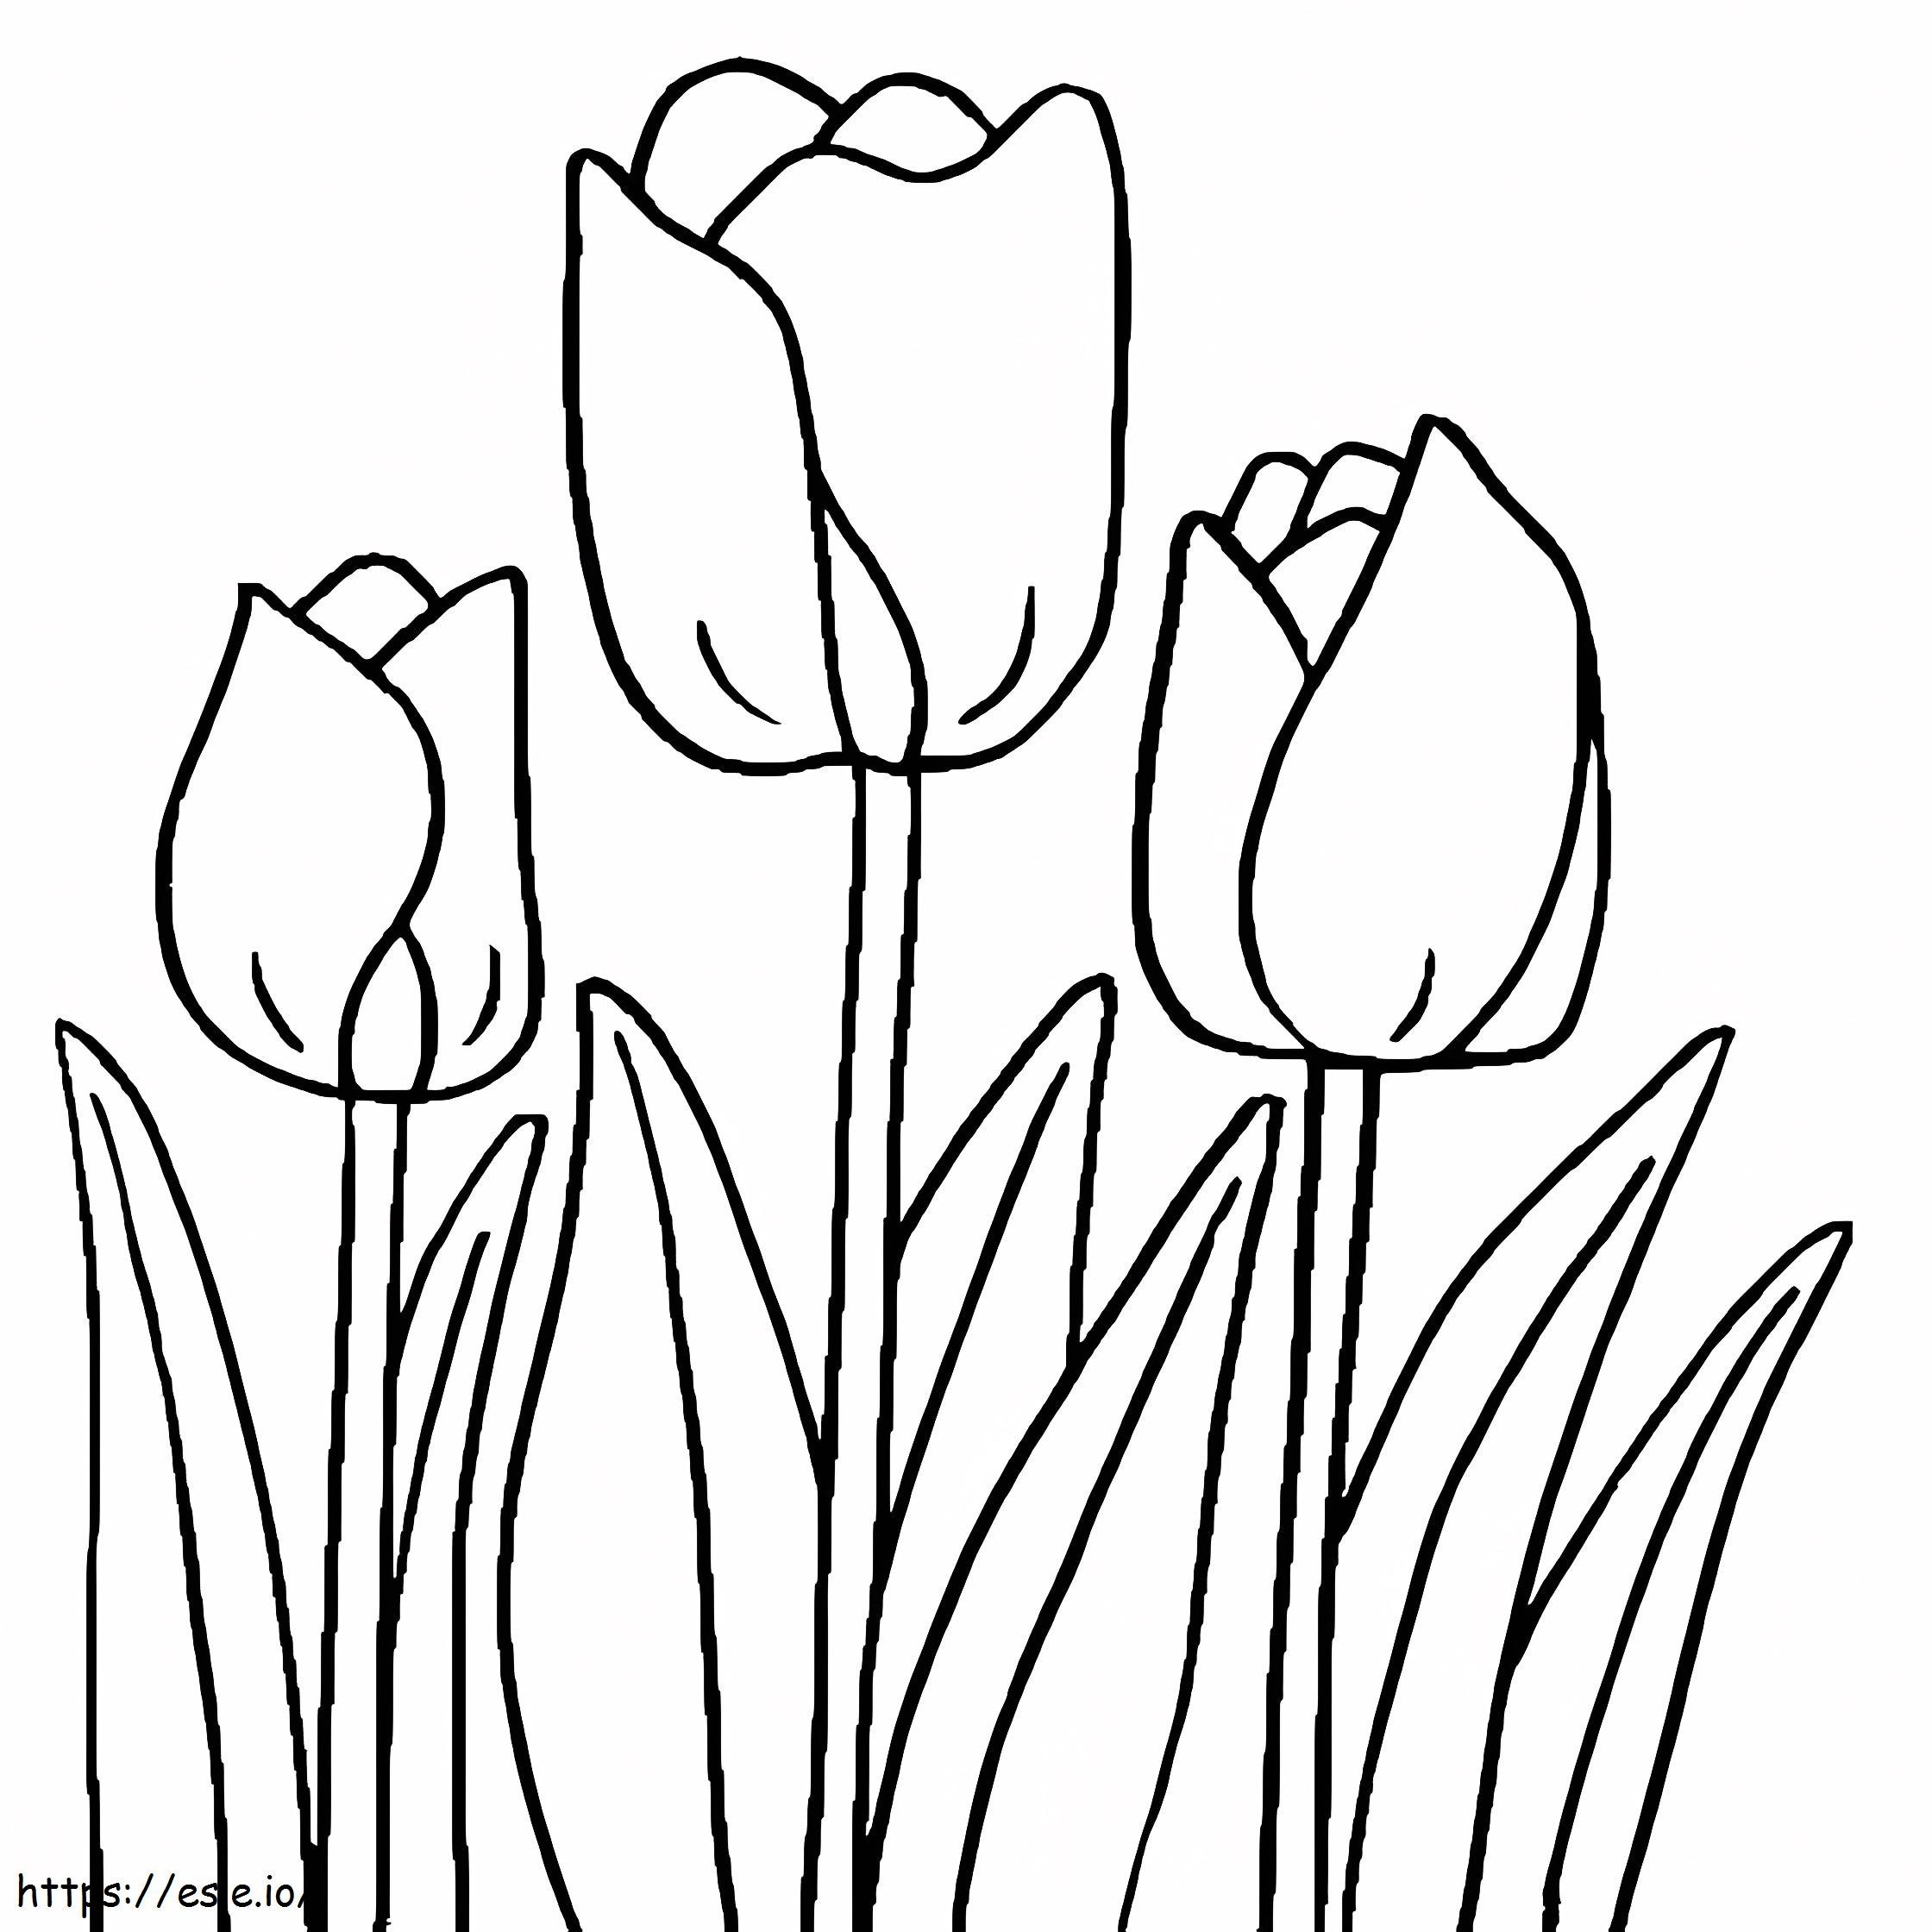 Coloriage Tulipe Normale à imprimer dessin